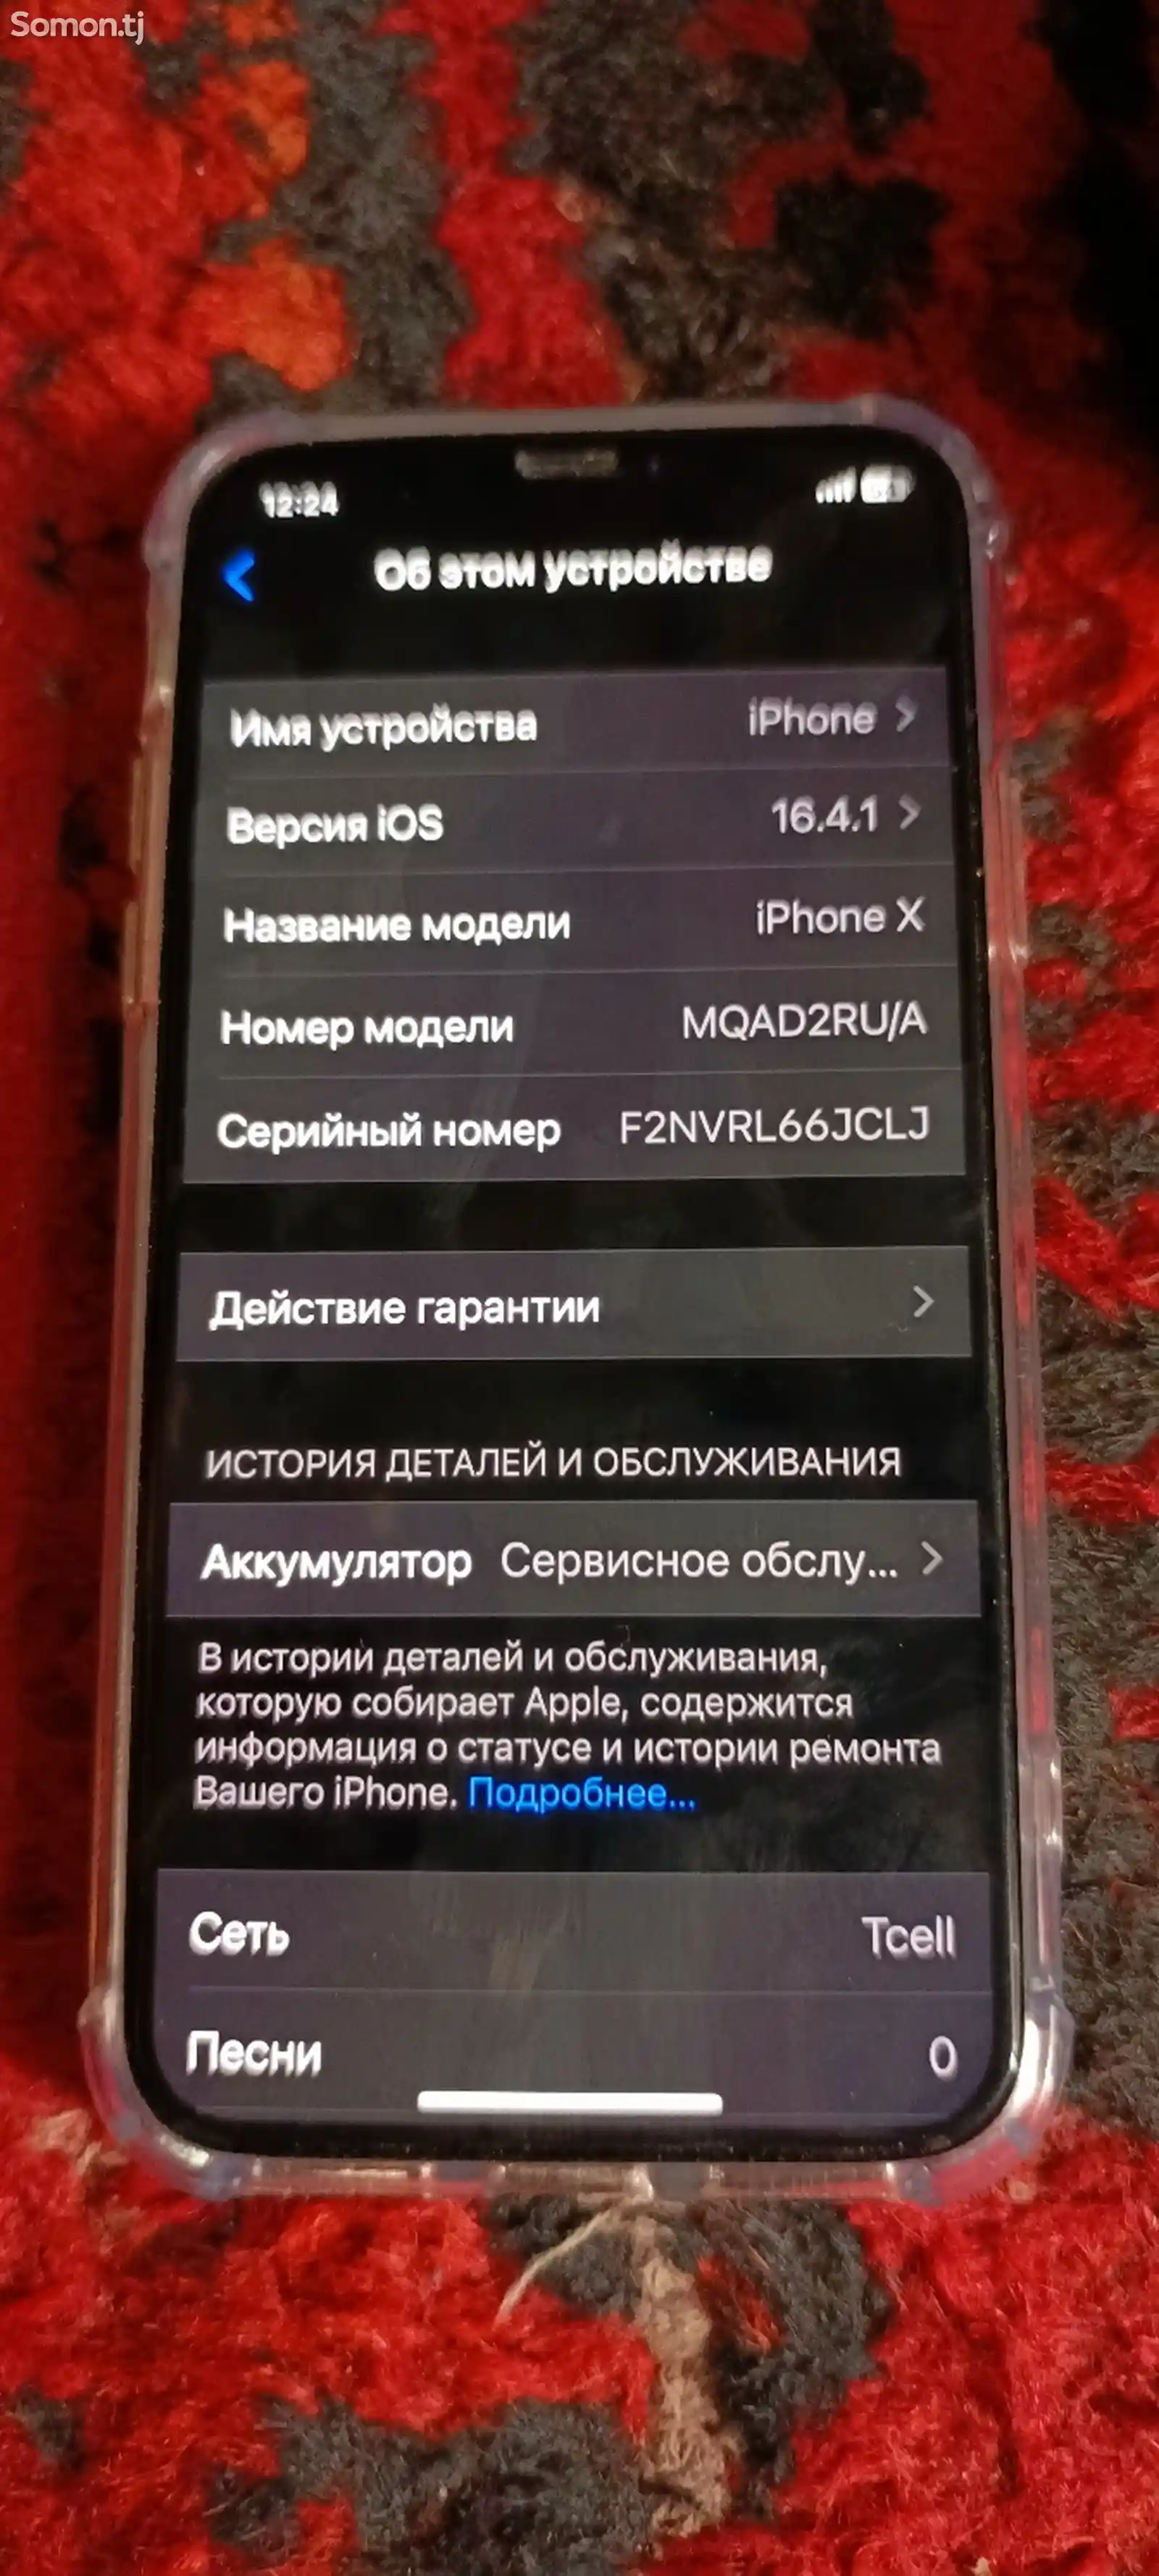 Apple iPhone X, 16 gb, Silver-2